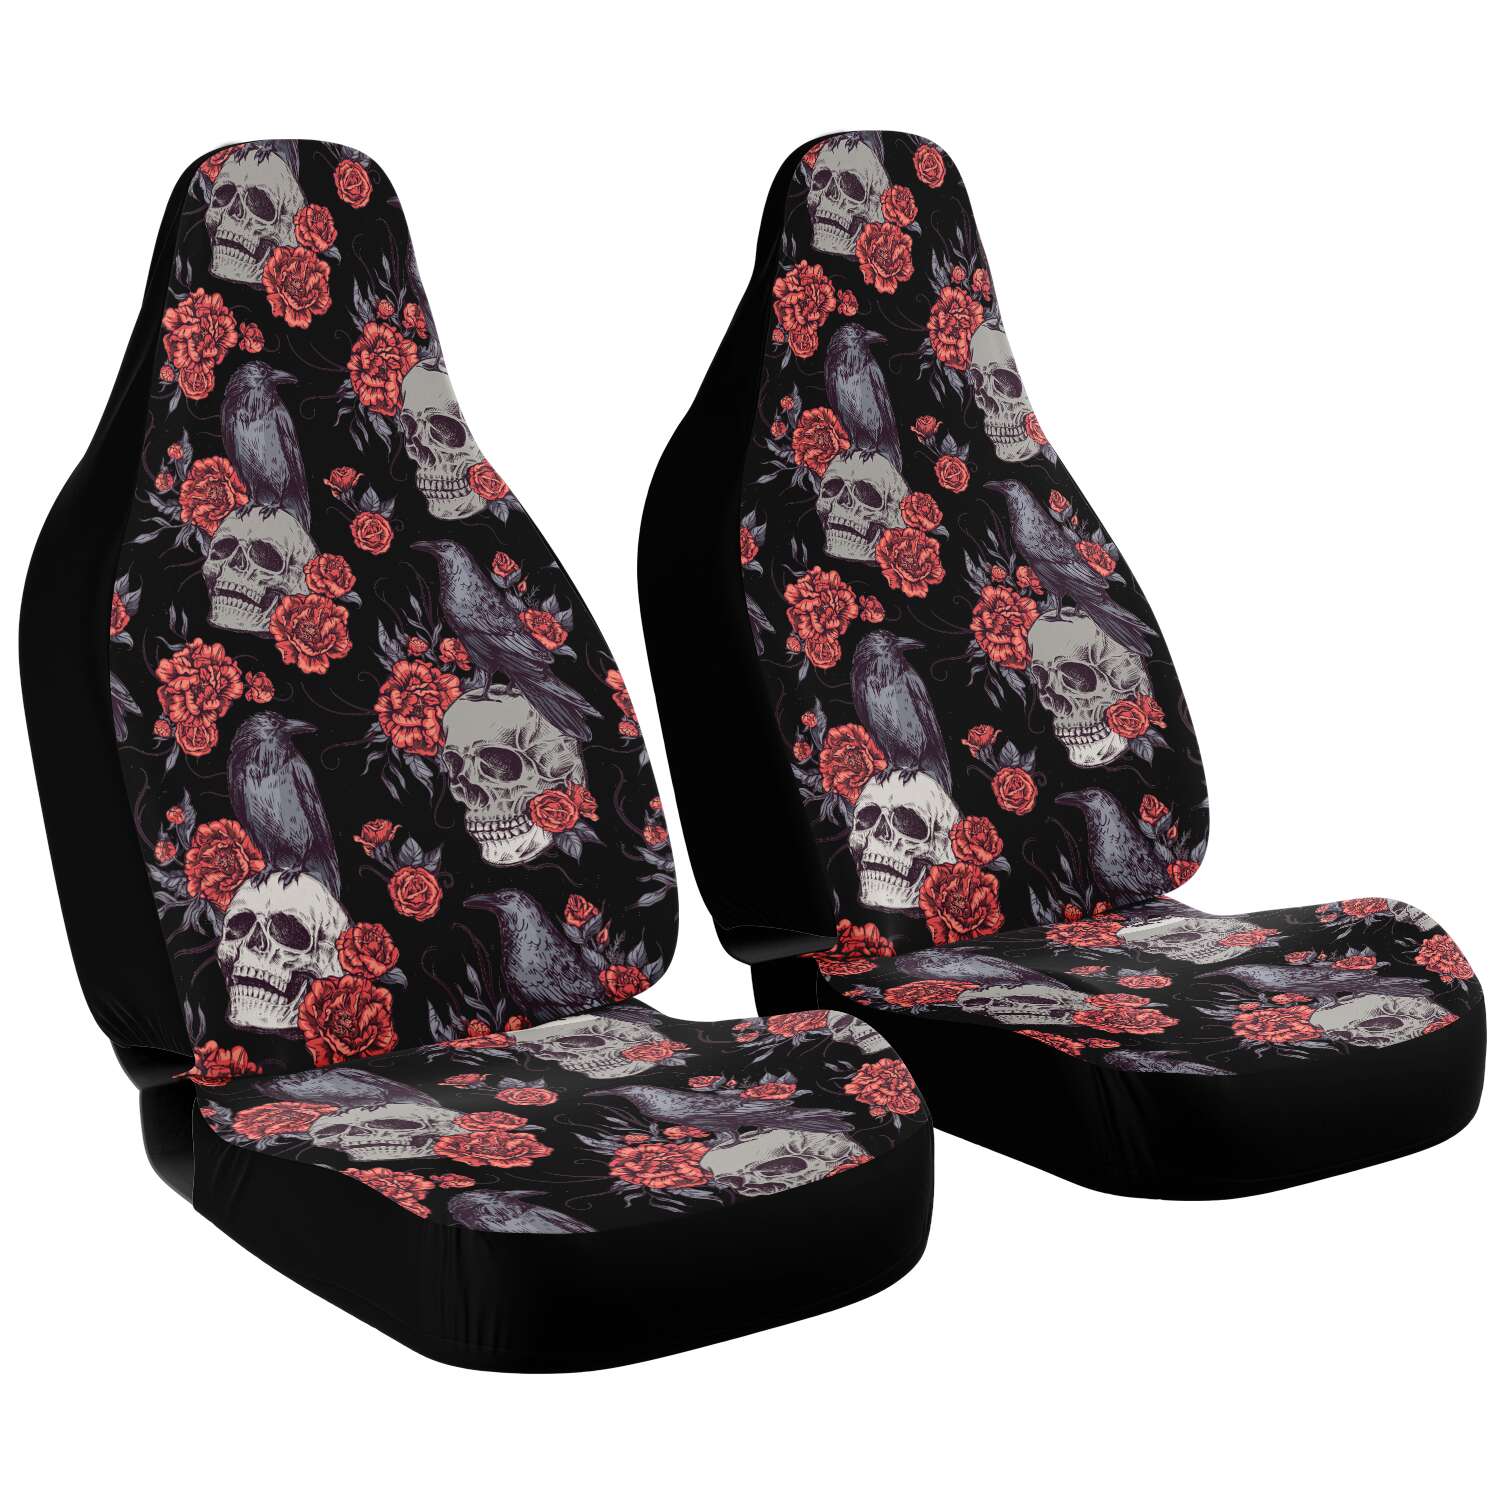 Skull Raven & Peonies Car Seat Cover Set